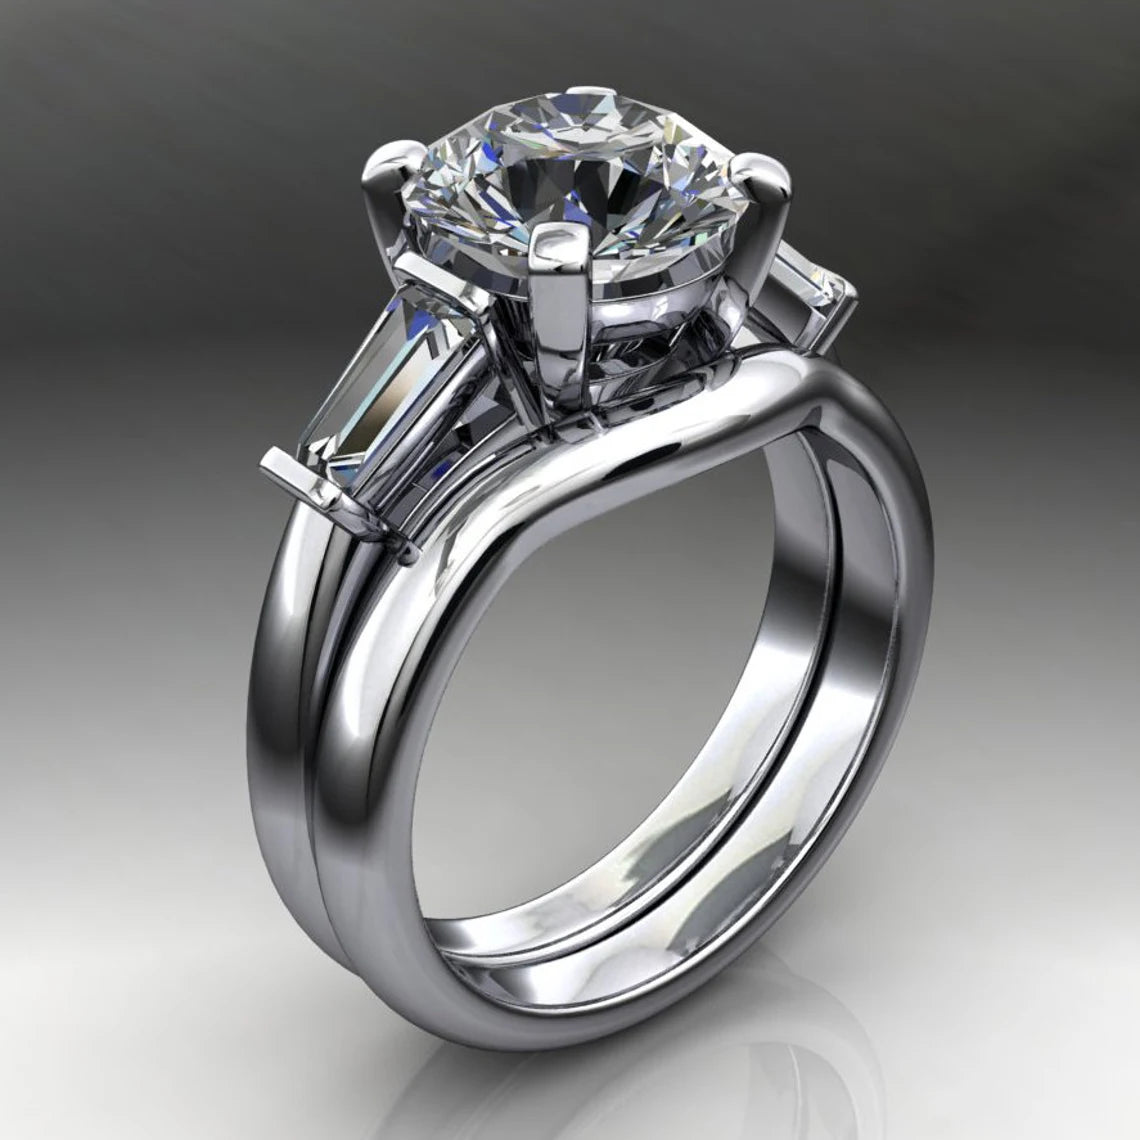 laurel ring – 2 carat round forever one moissanite engagement ring, diamonds - J Hollywood Designs